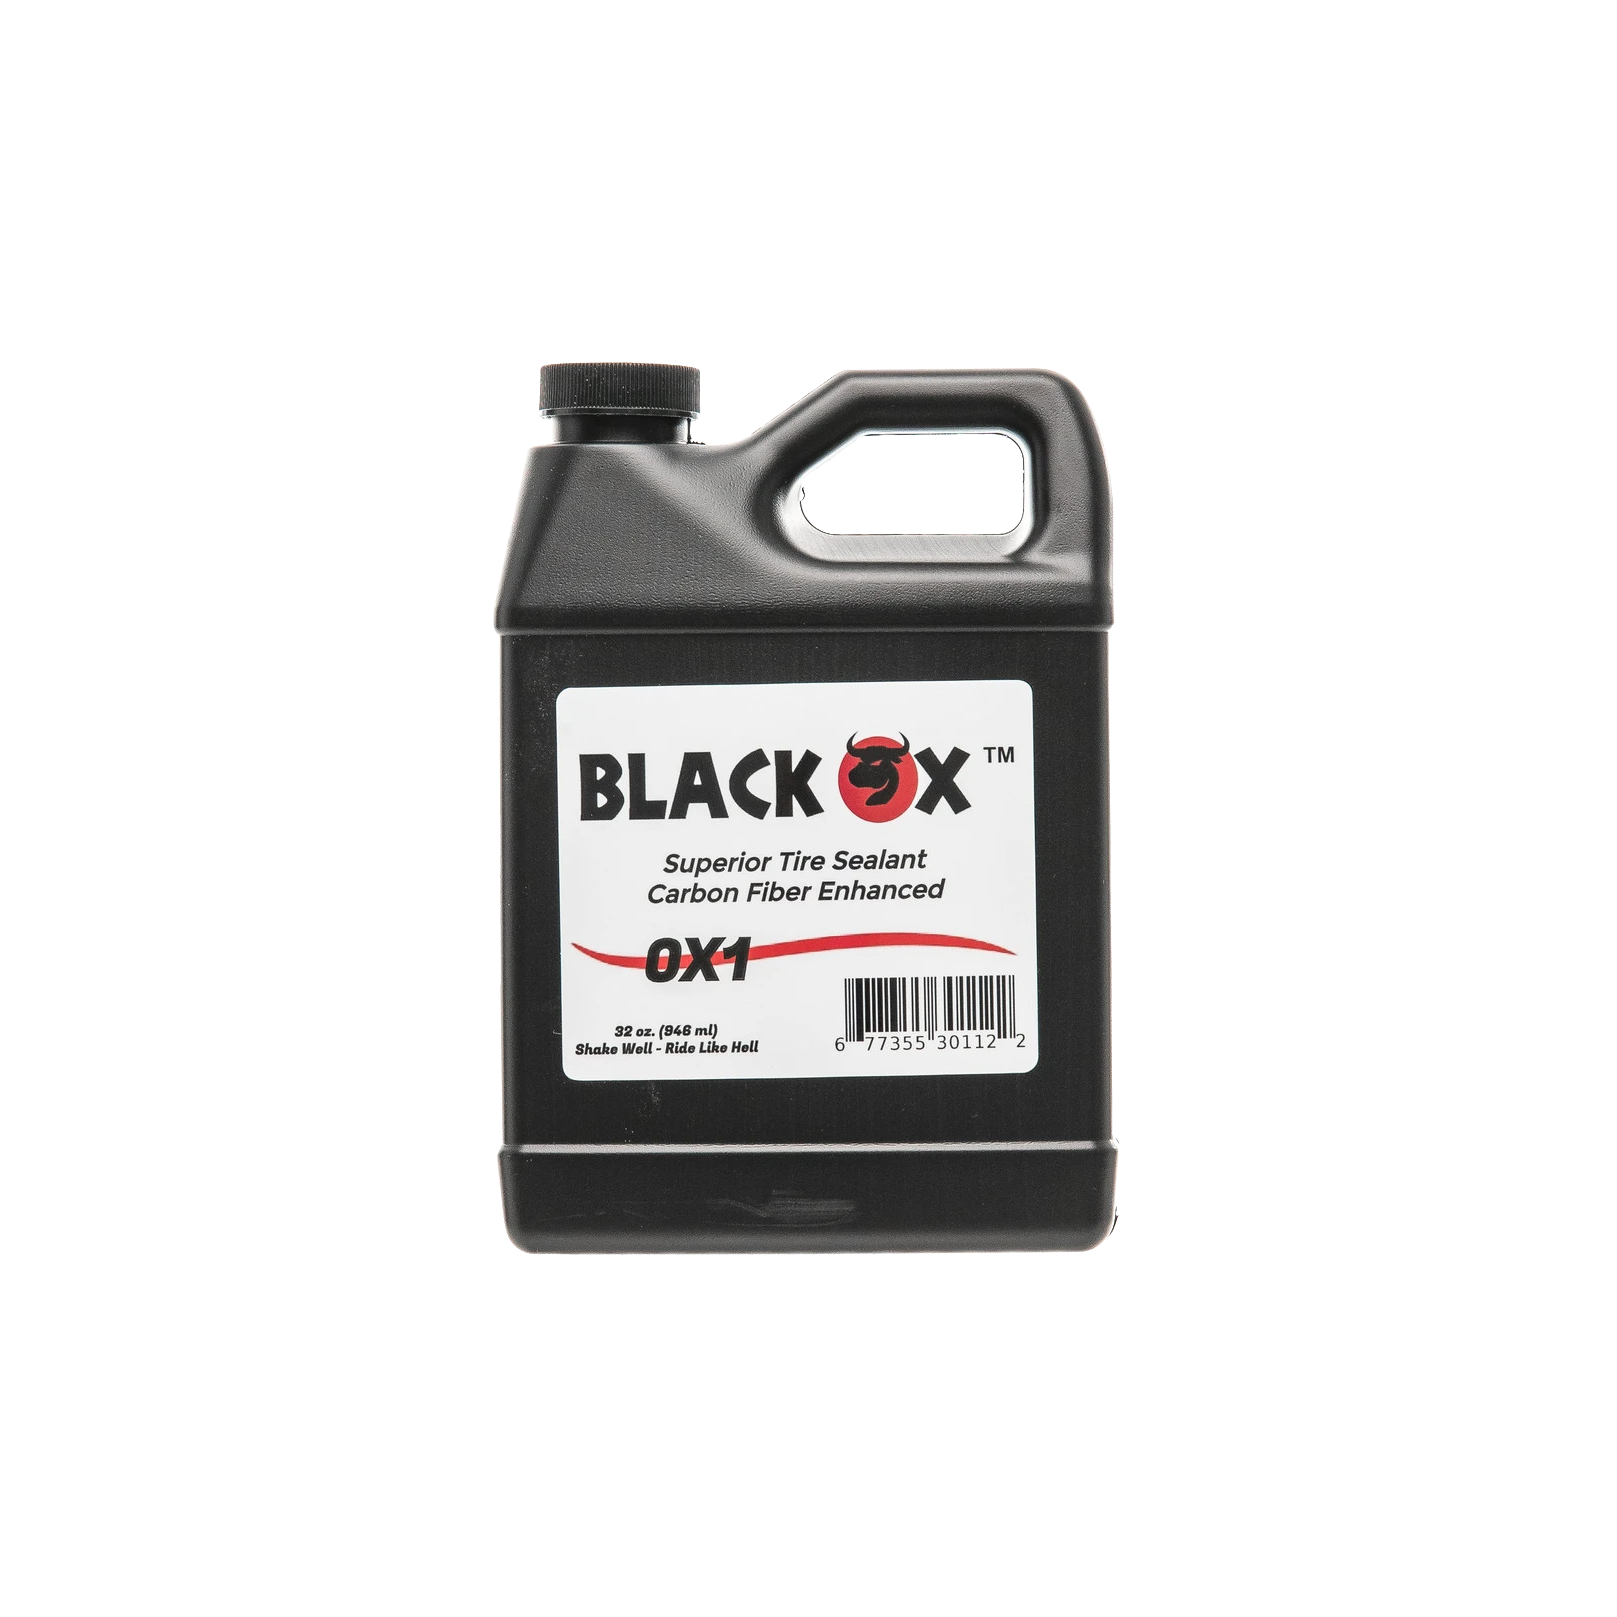 Black Ox OX1 - Tire Sealant, 32oz